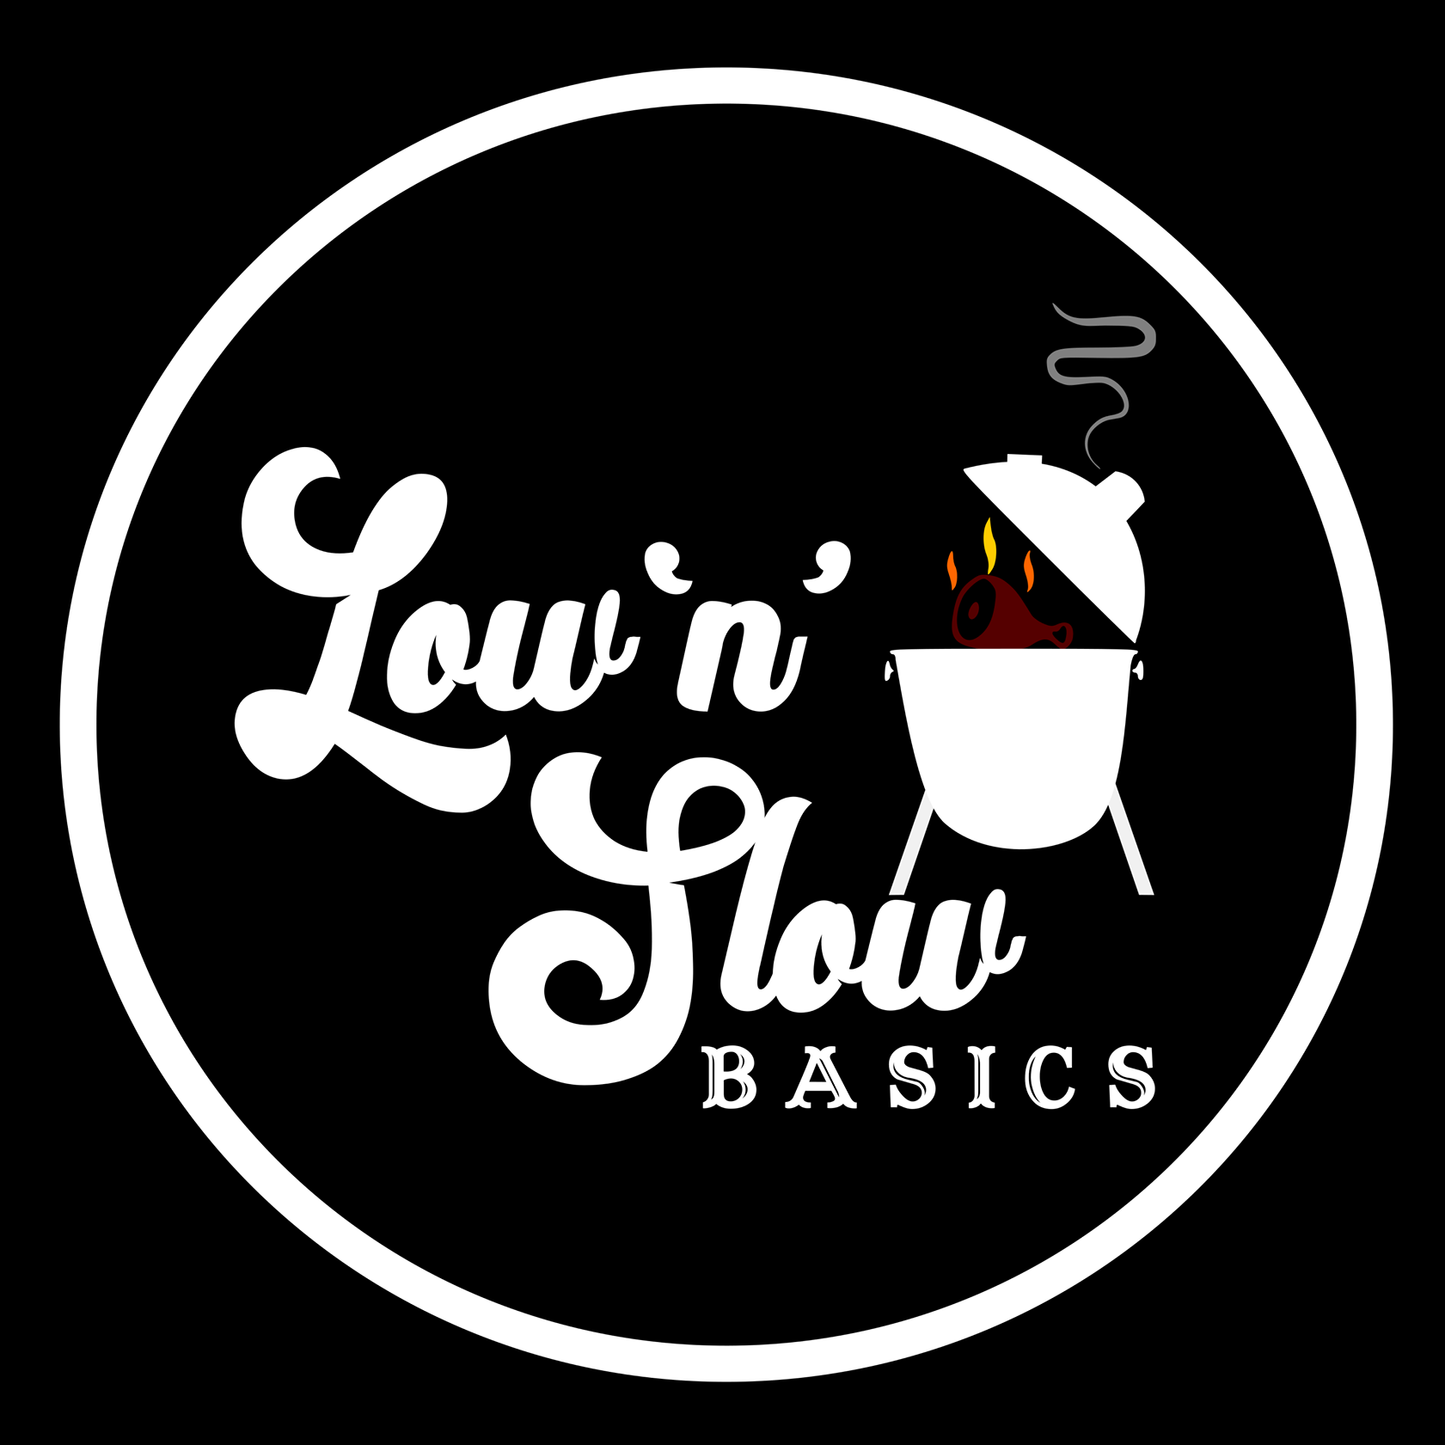 Low n Slow Basics - Garlic Goals